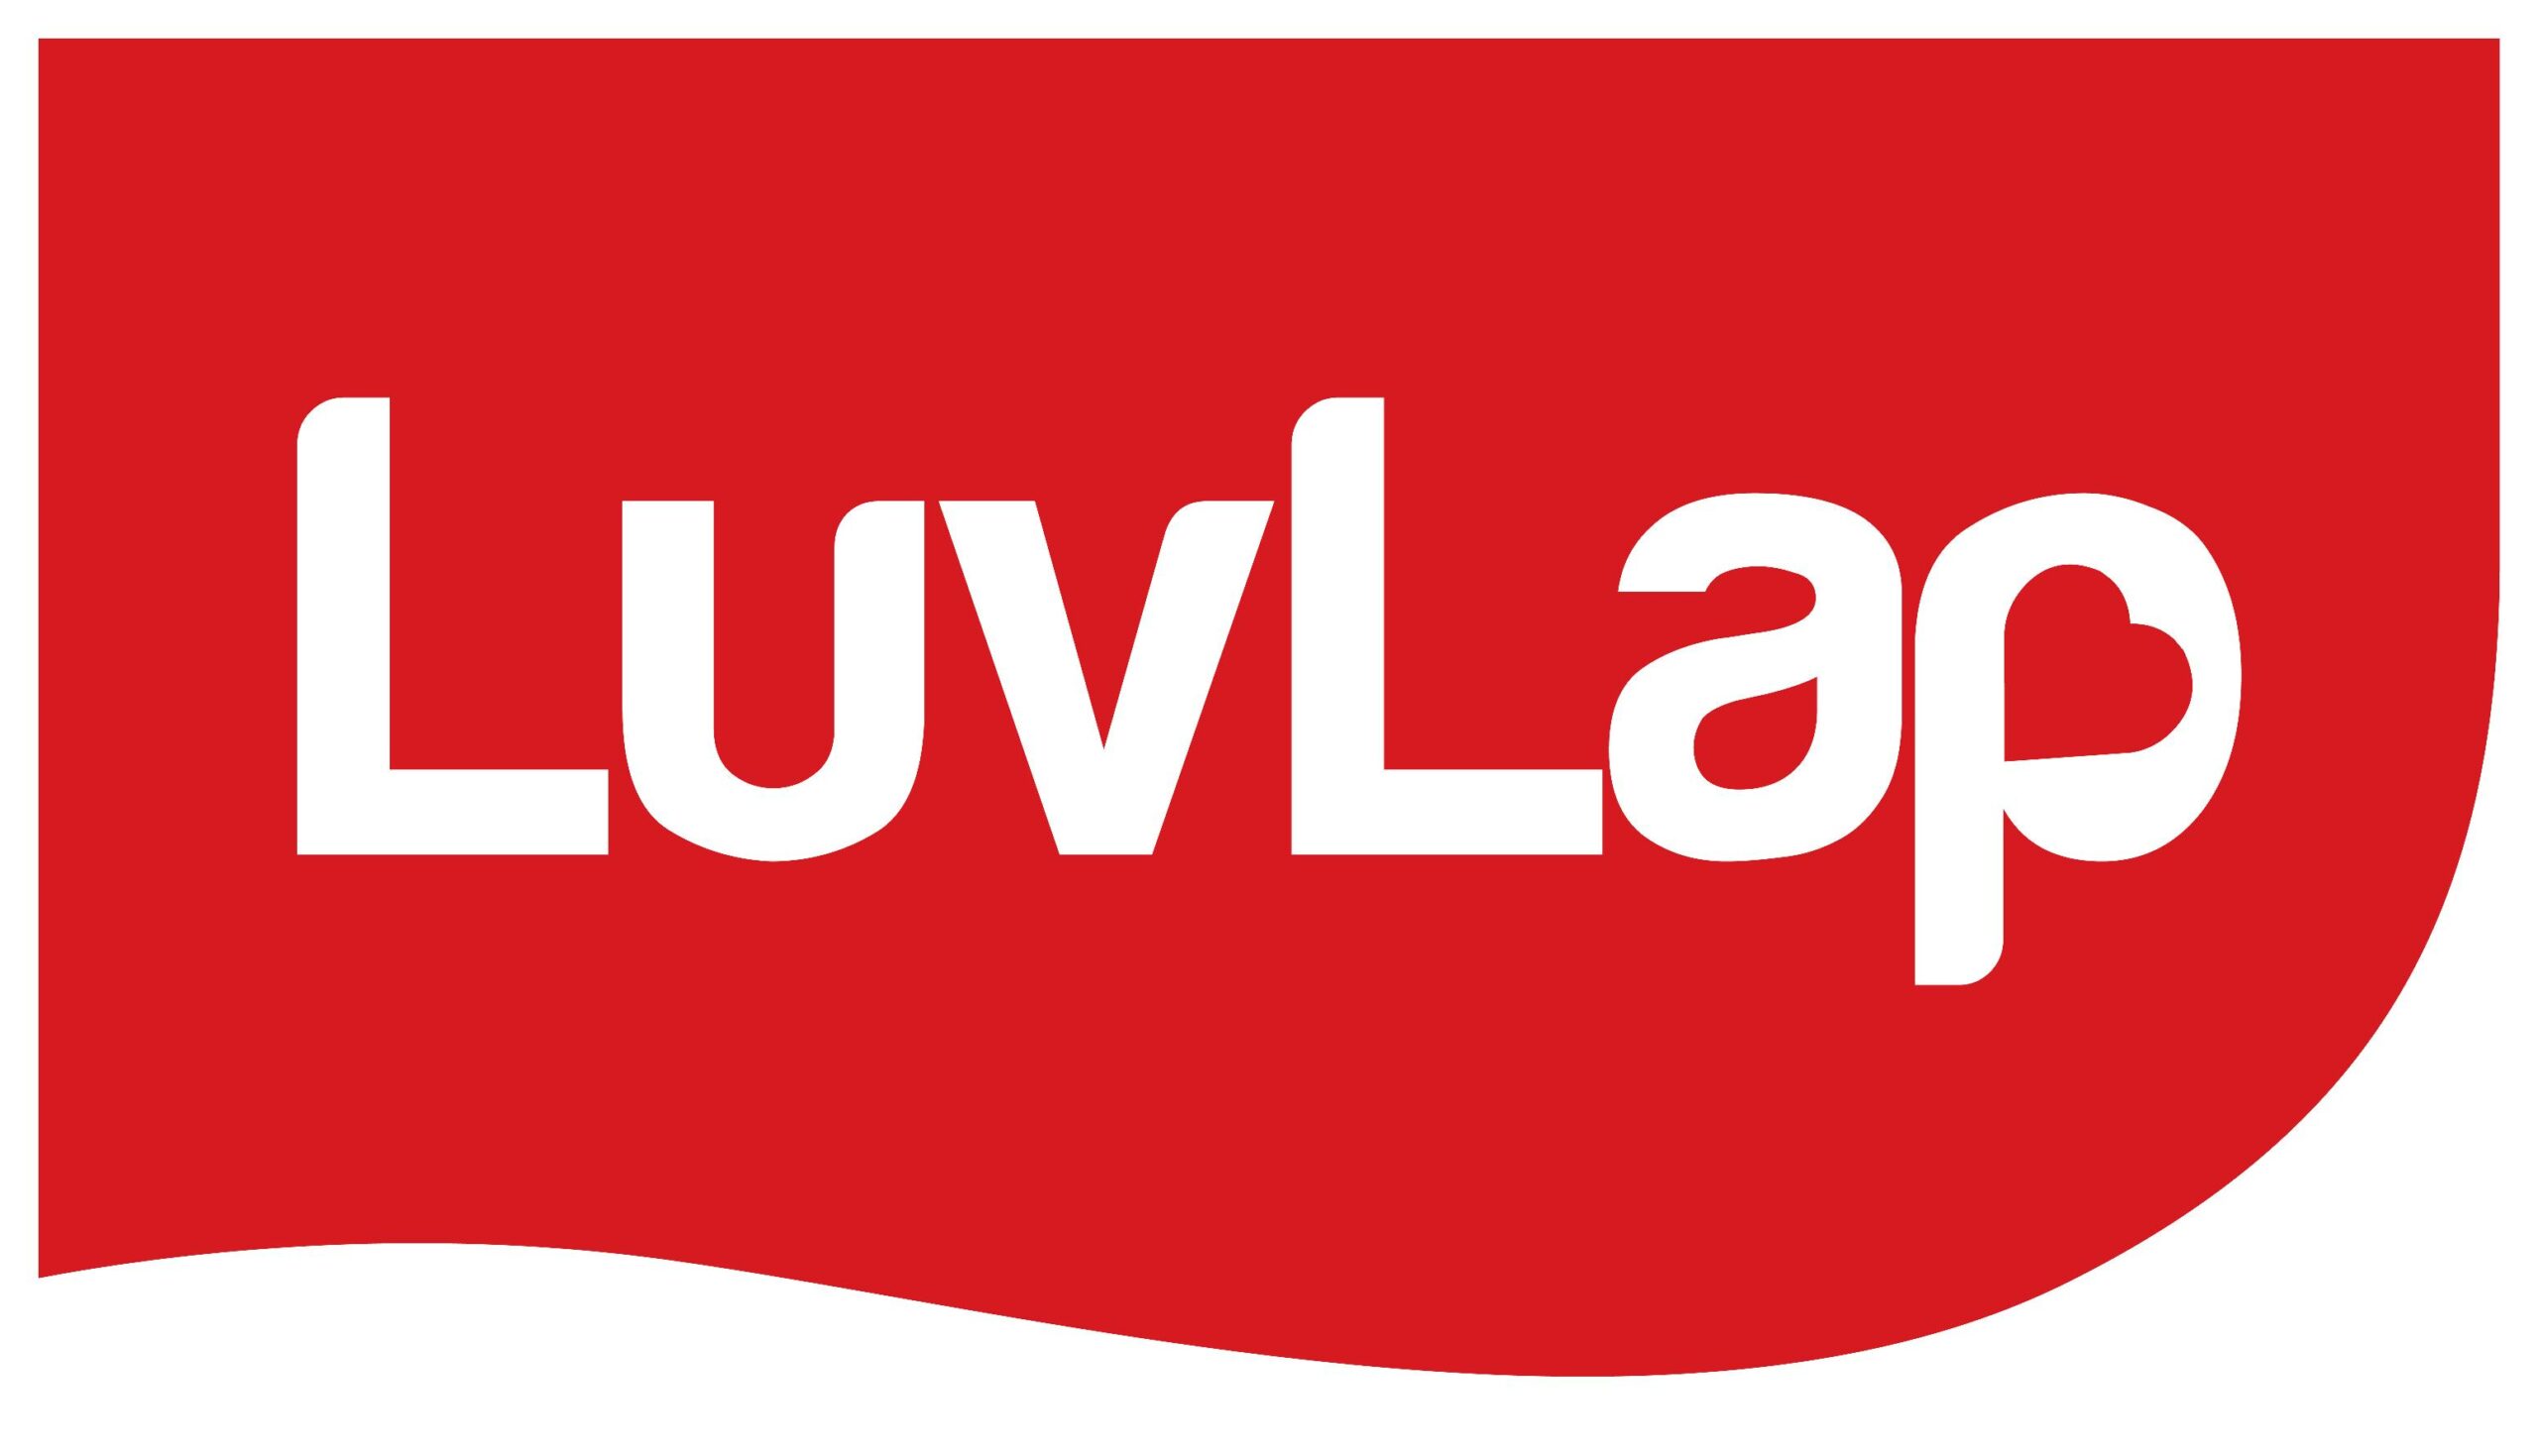 LuvLap